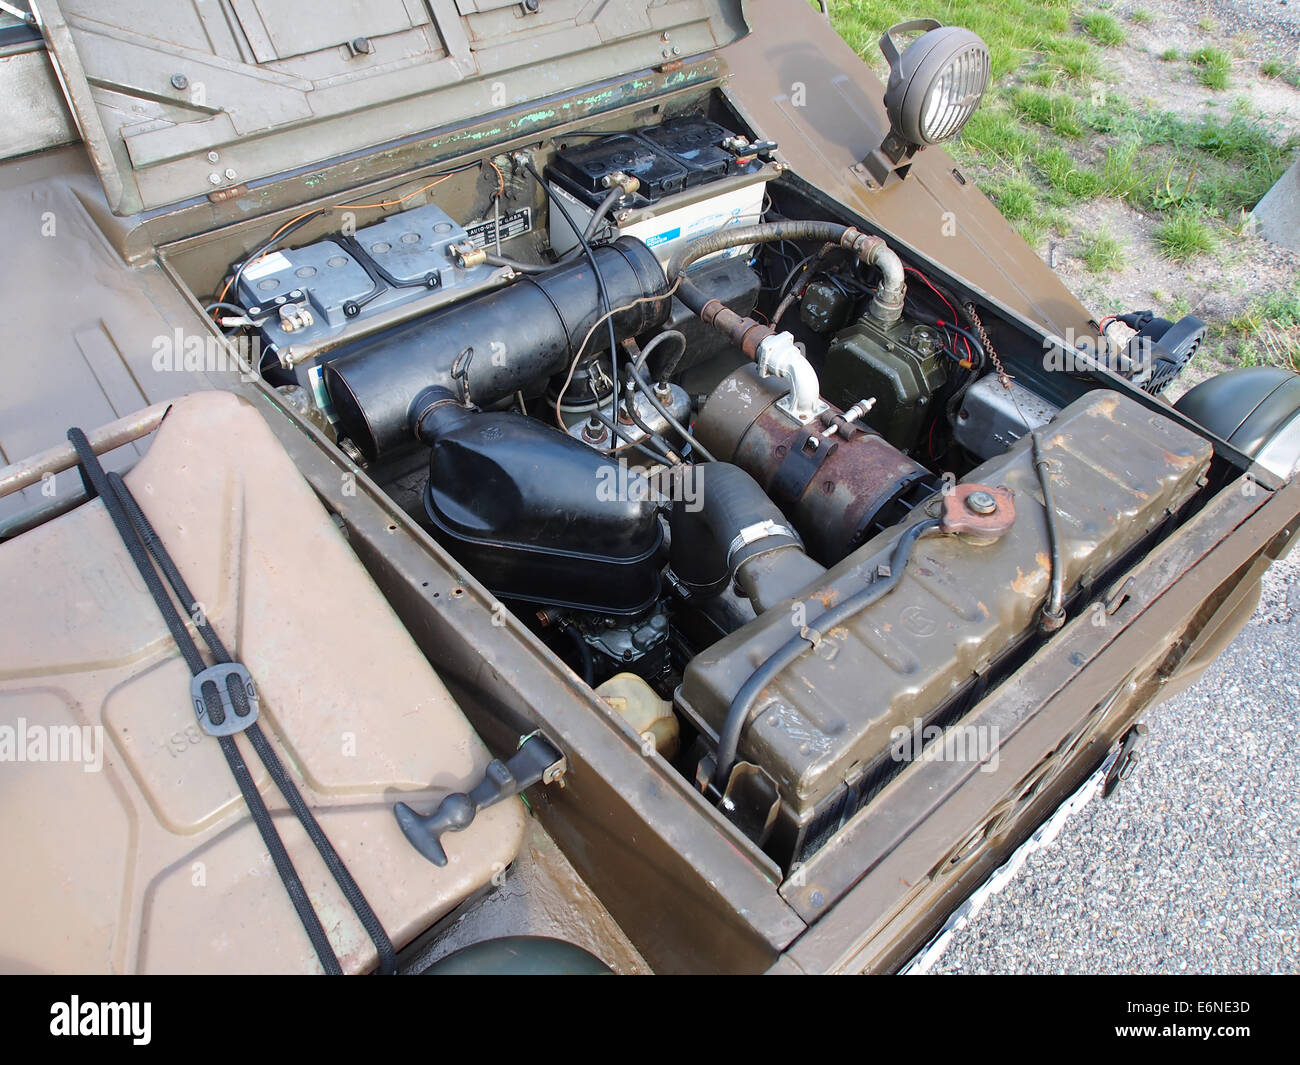 1977 Military Auto Union Munga engine, pic6 Stock Photo